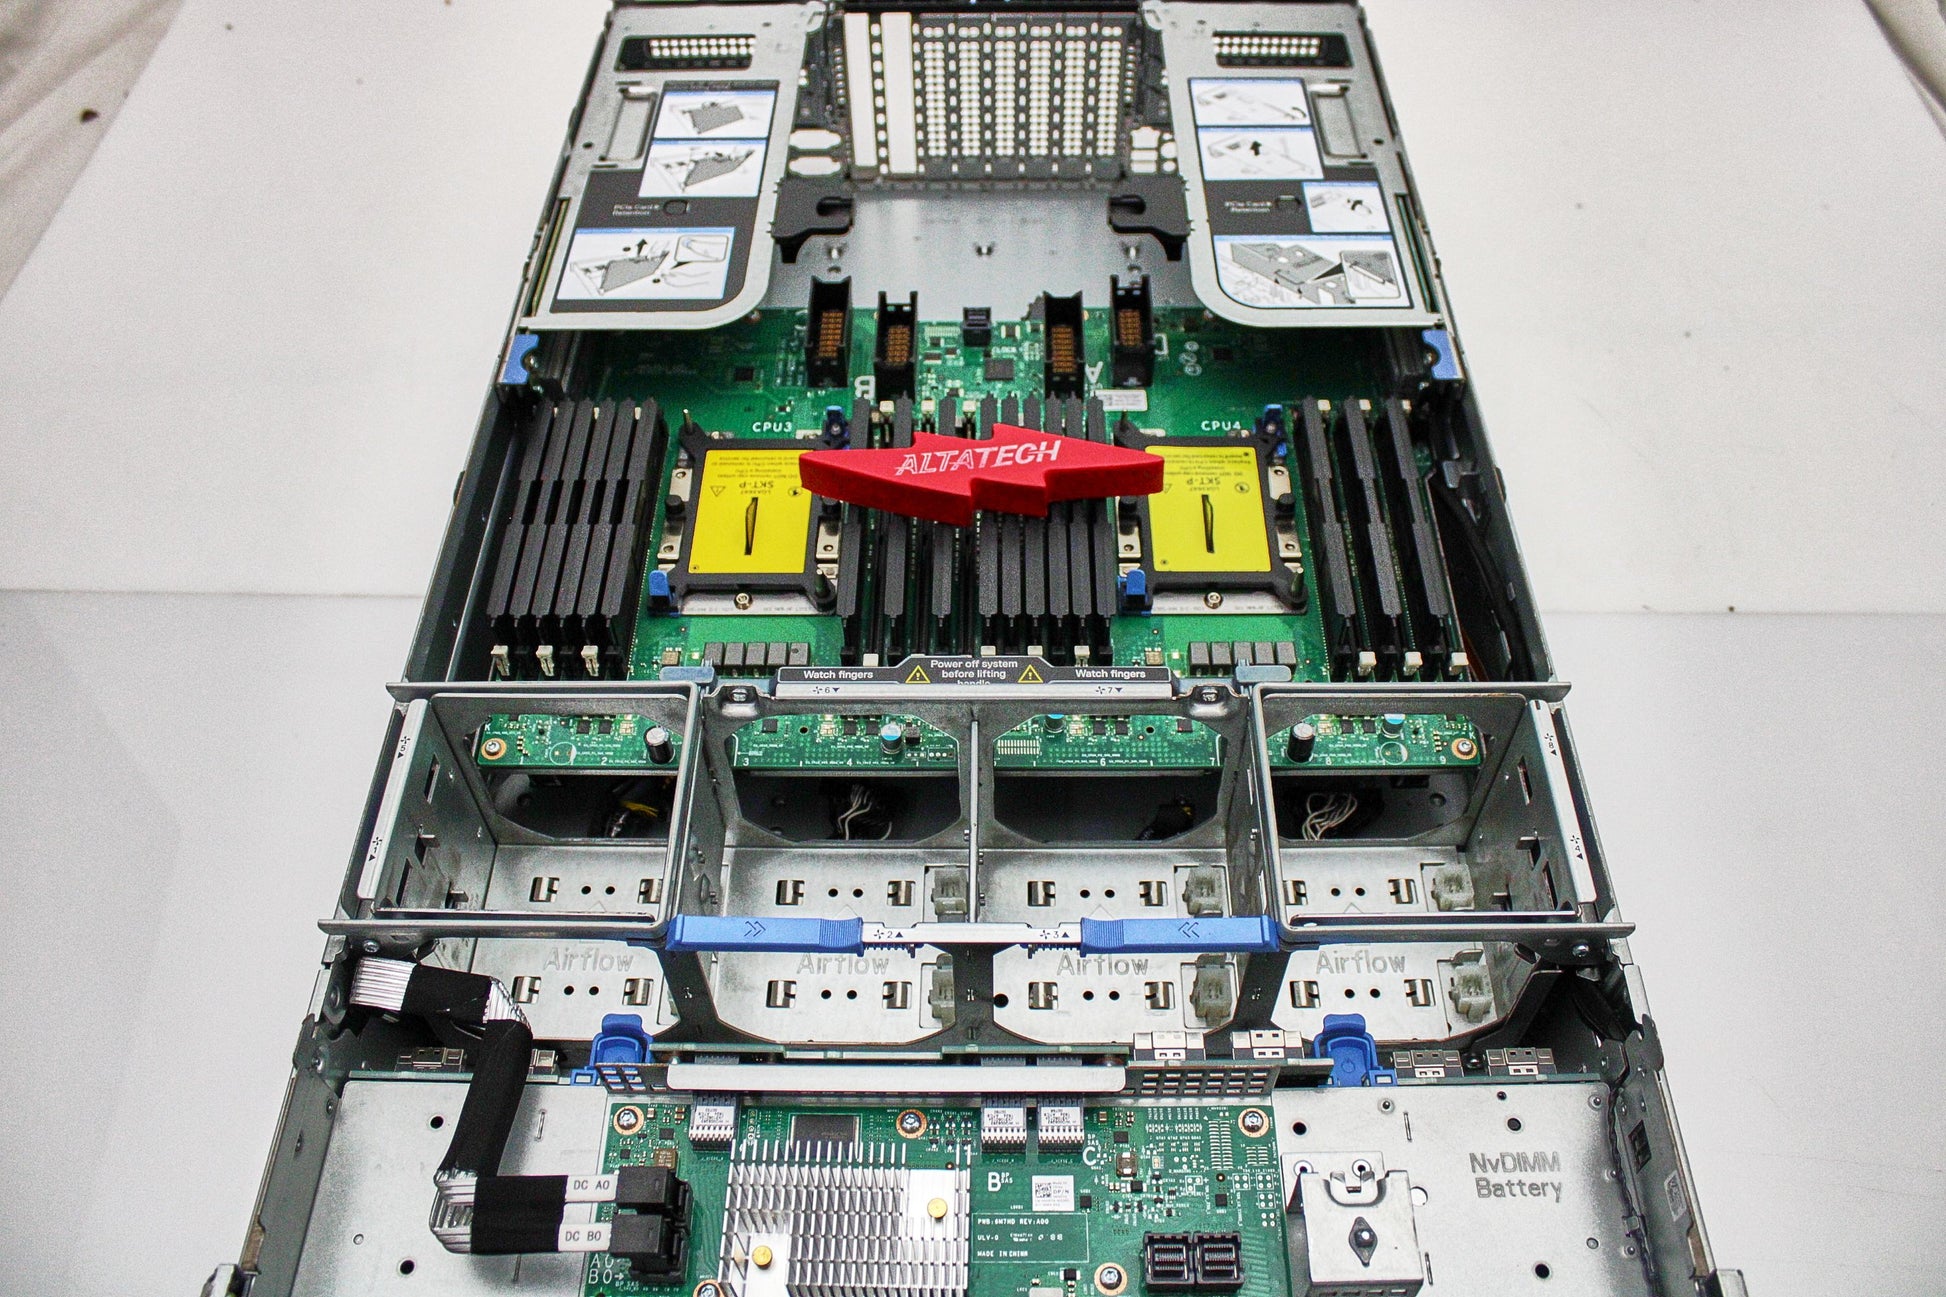 Dell PER940-2.5-24HDD PowerEdge R940 24x2.5' 3U Server, Used